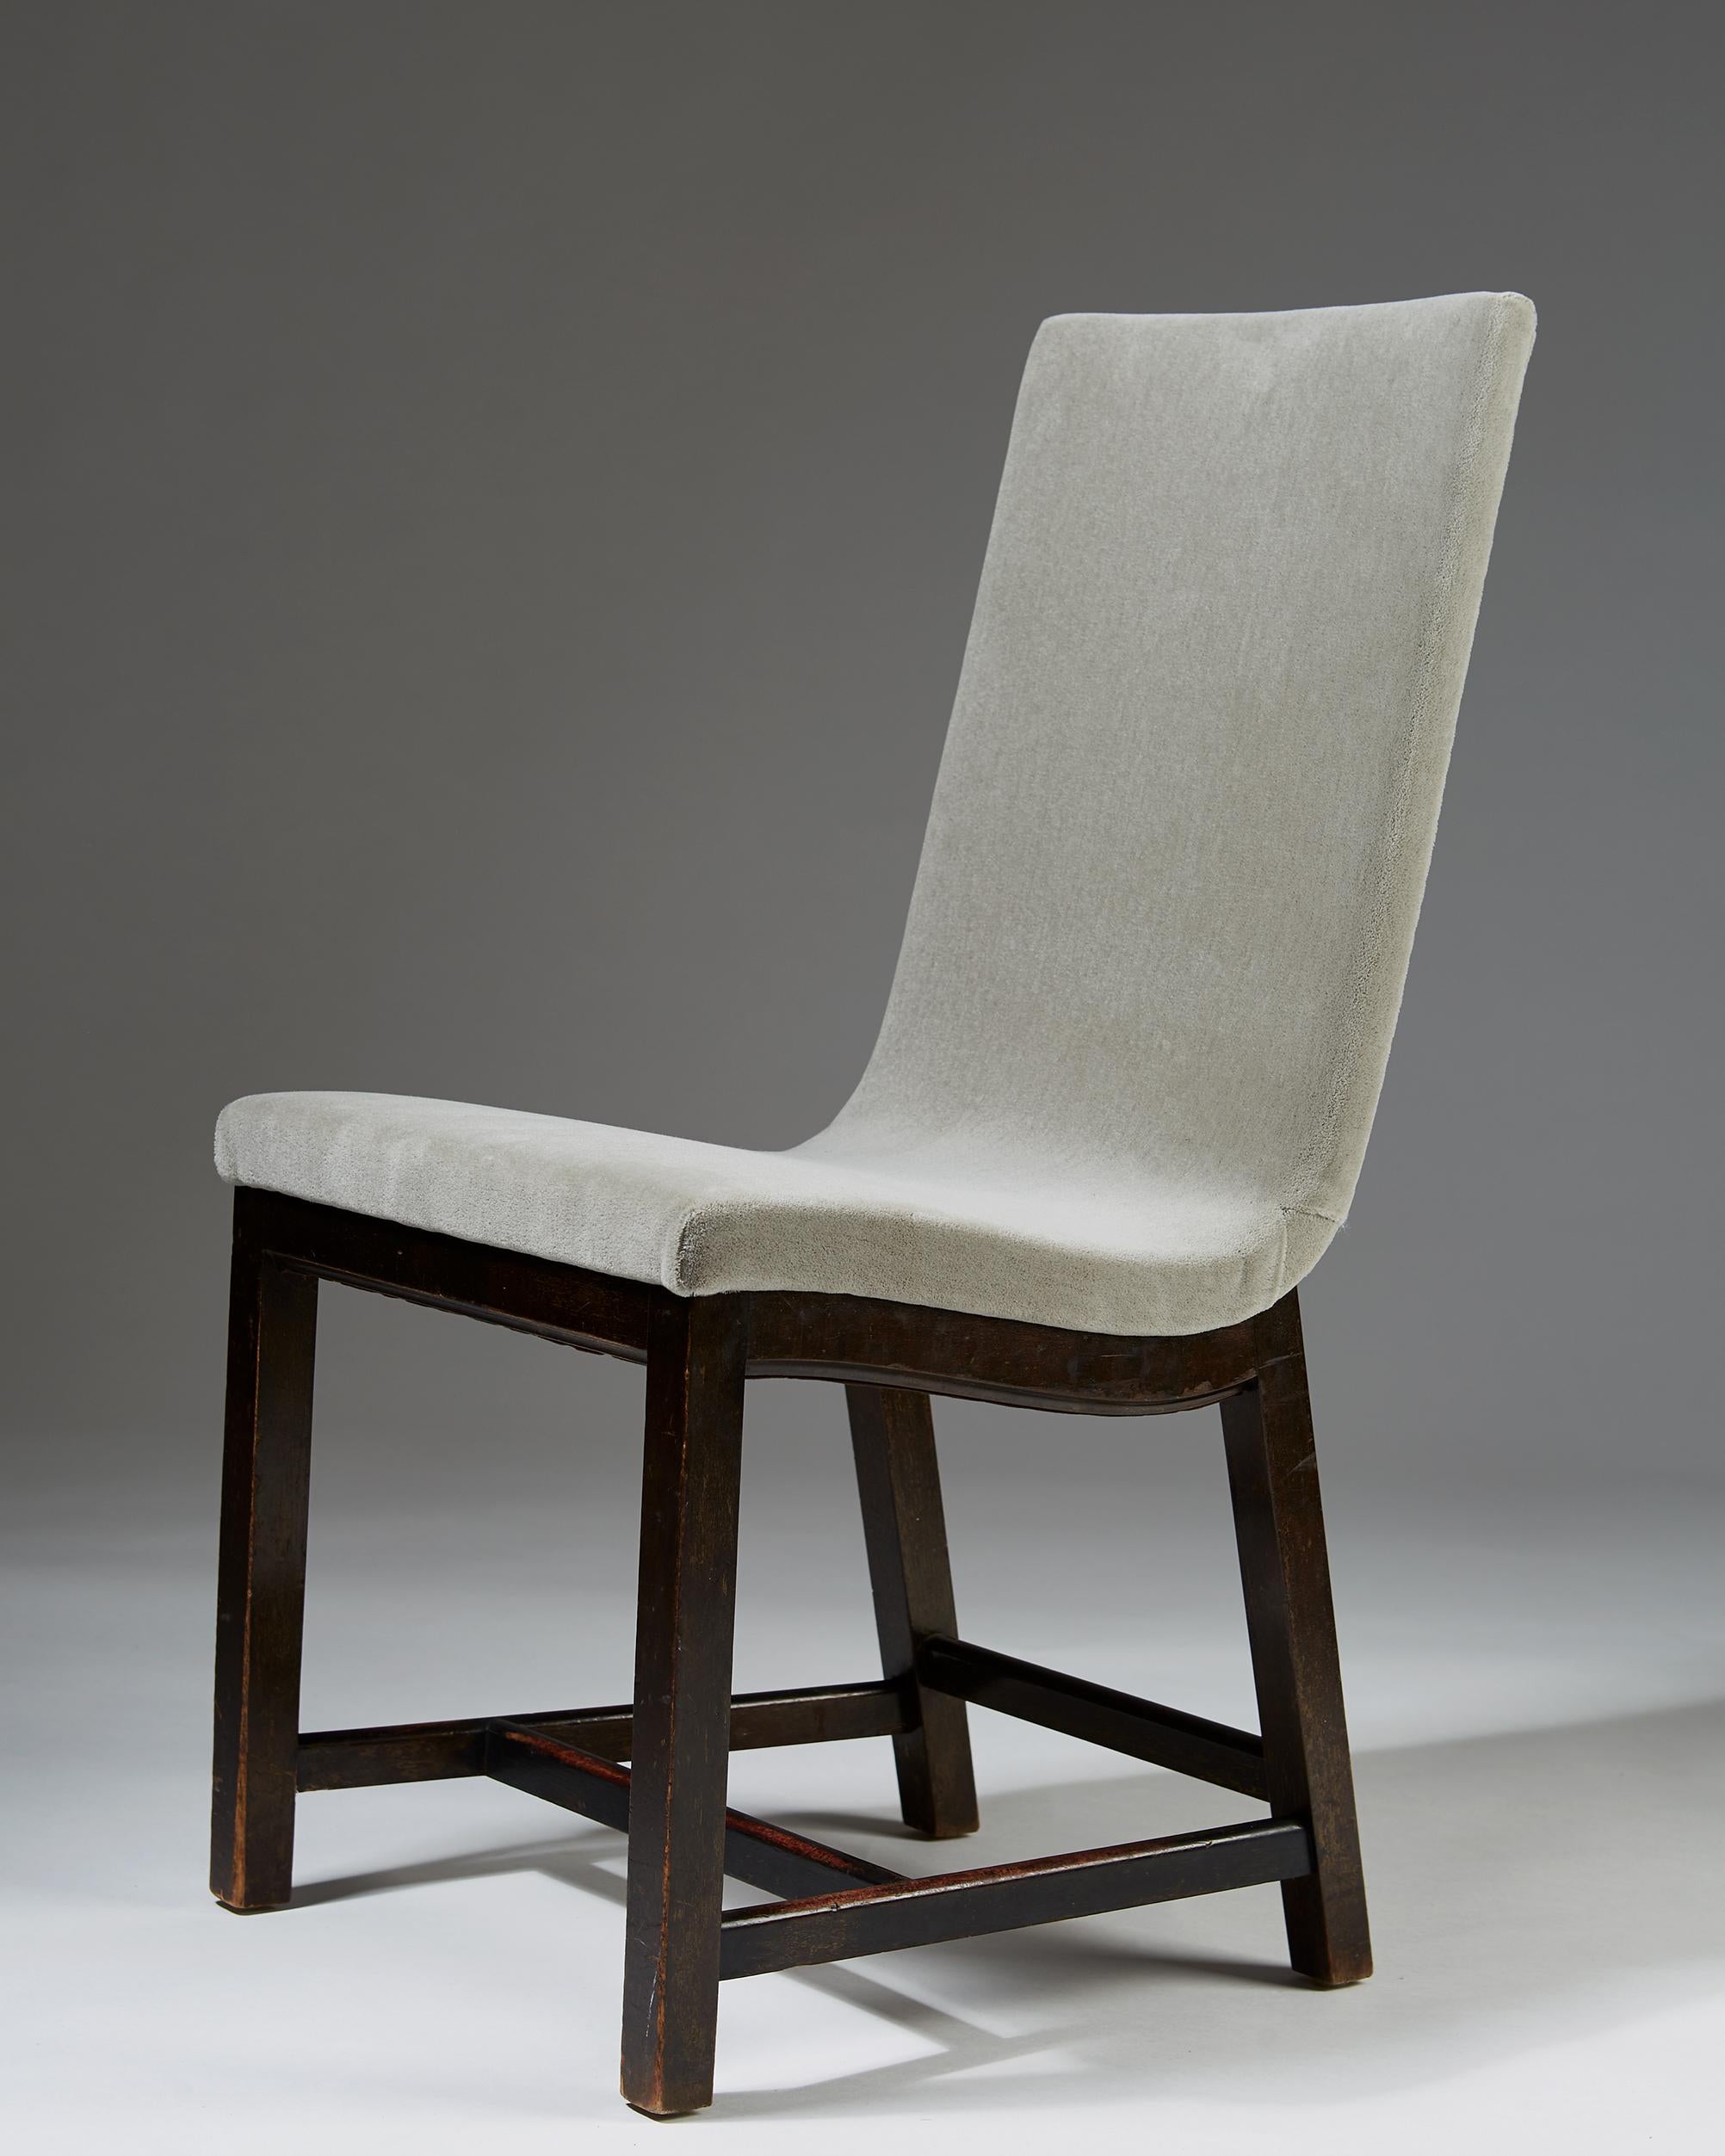 Set of Three Chairs “Typenko” by Axel Einar Hjorth, Nordiska Kompaniet, Sweden In Excellent Condition For Sale In Stockholm, SE